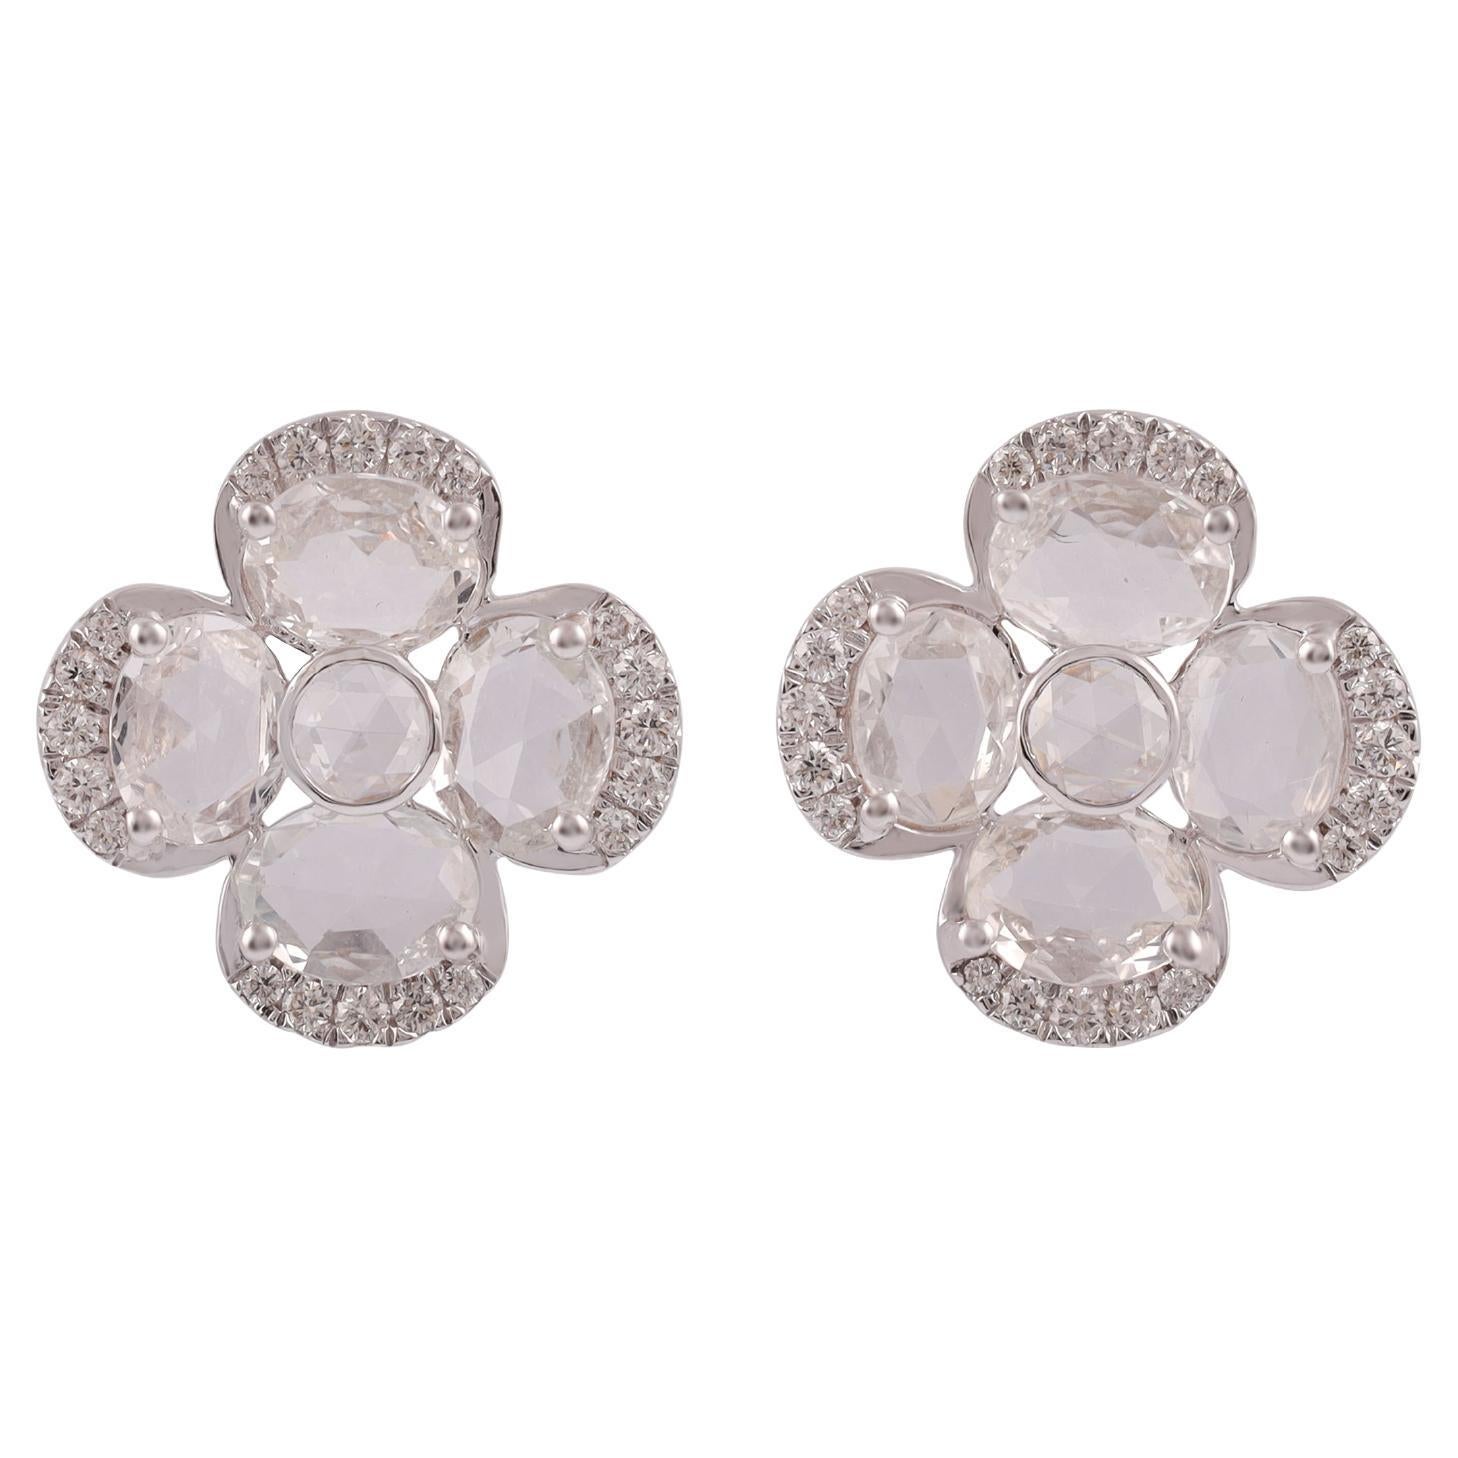 2.26 Carat White Sapphire, Rose cut & Round Diamond Earrings Studs (boucles d'oreilles saphir blanc, taille rose et diamant rond).